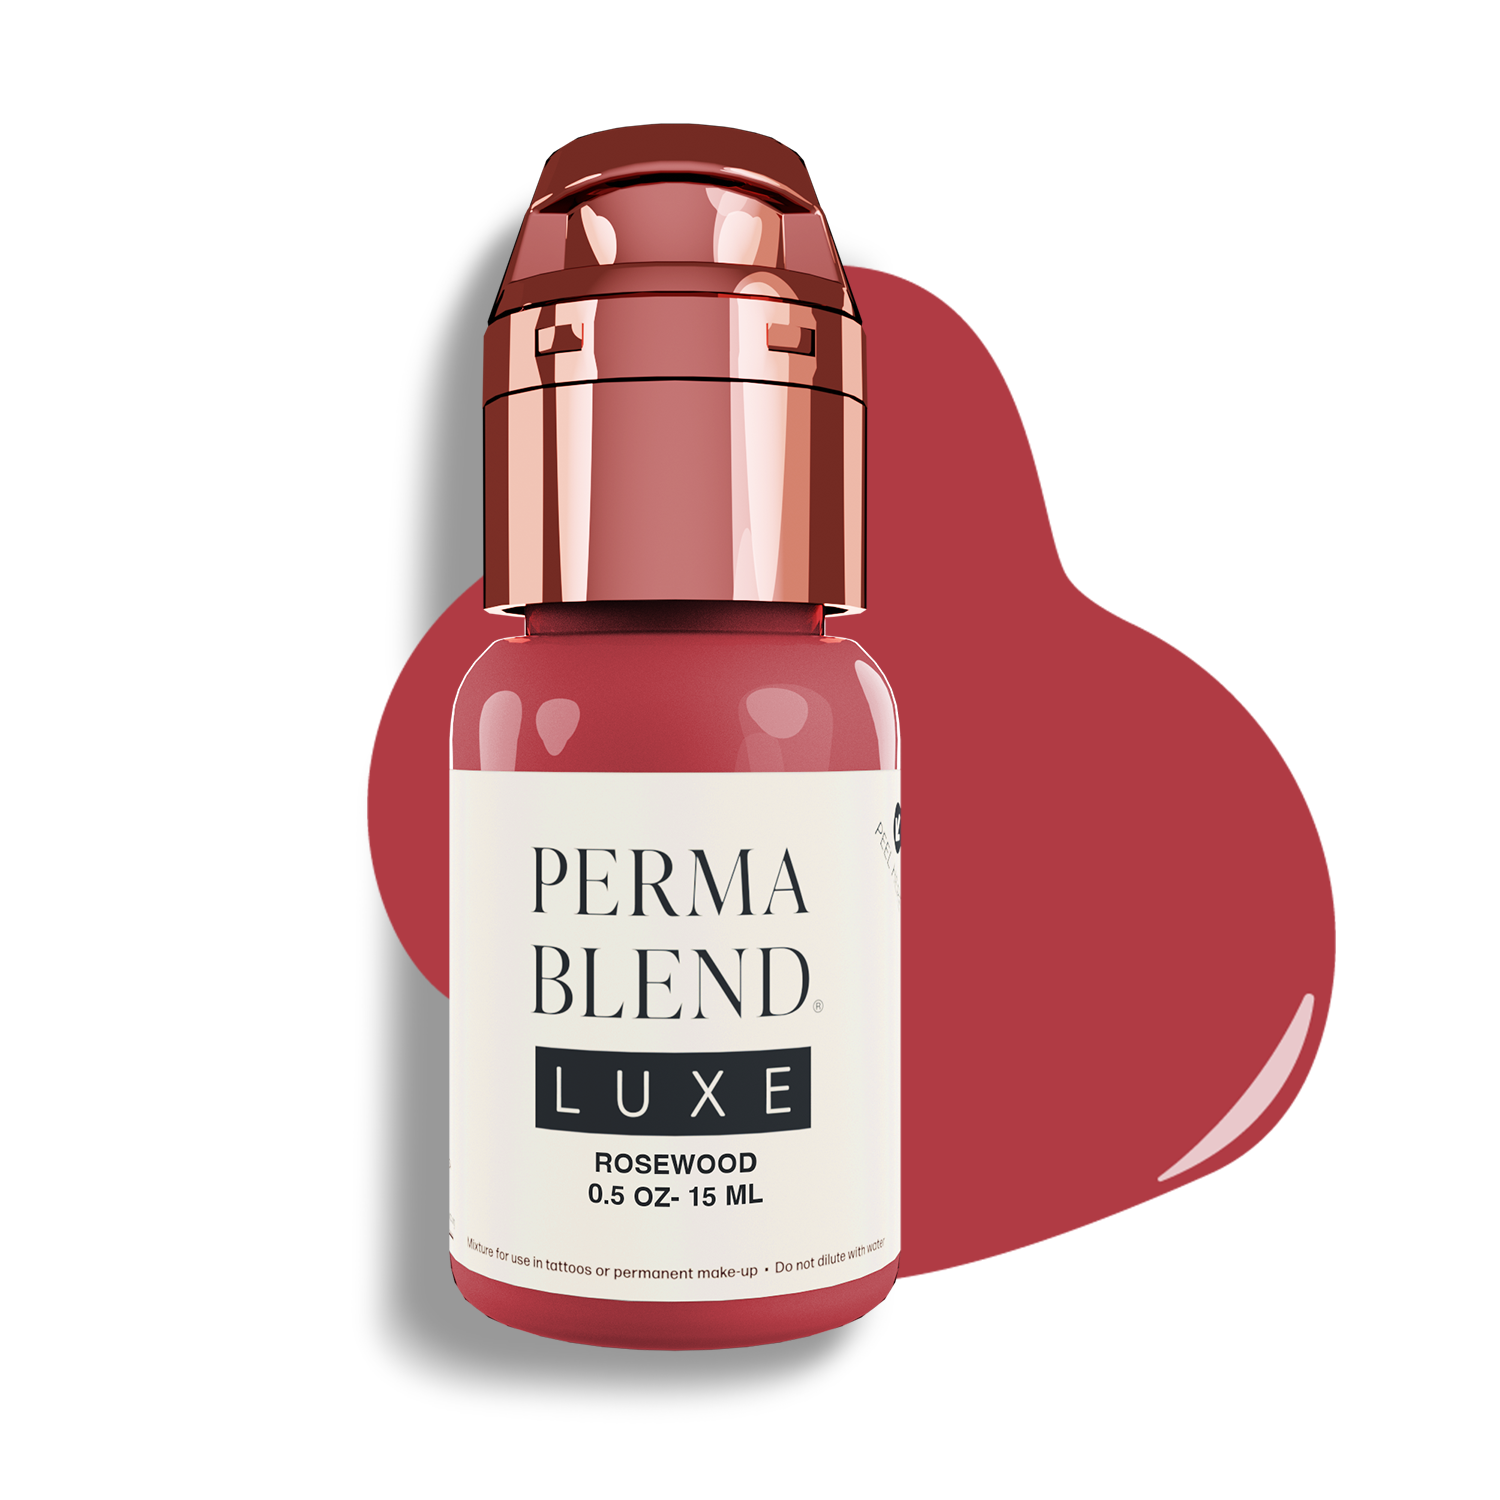 Perma Blend Luxe PMU Ink | Rosewood | Lips